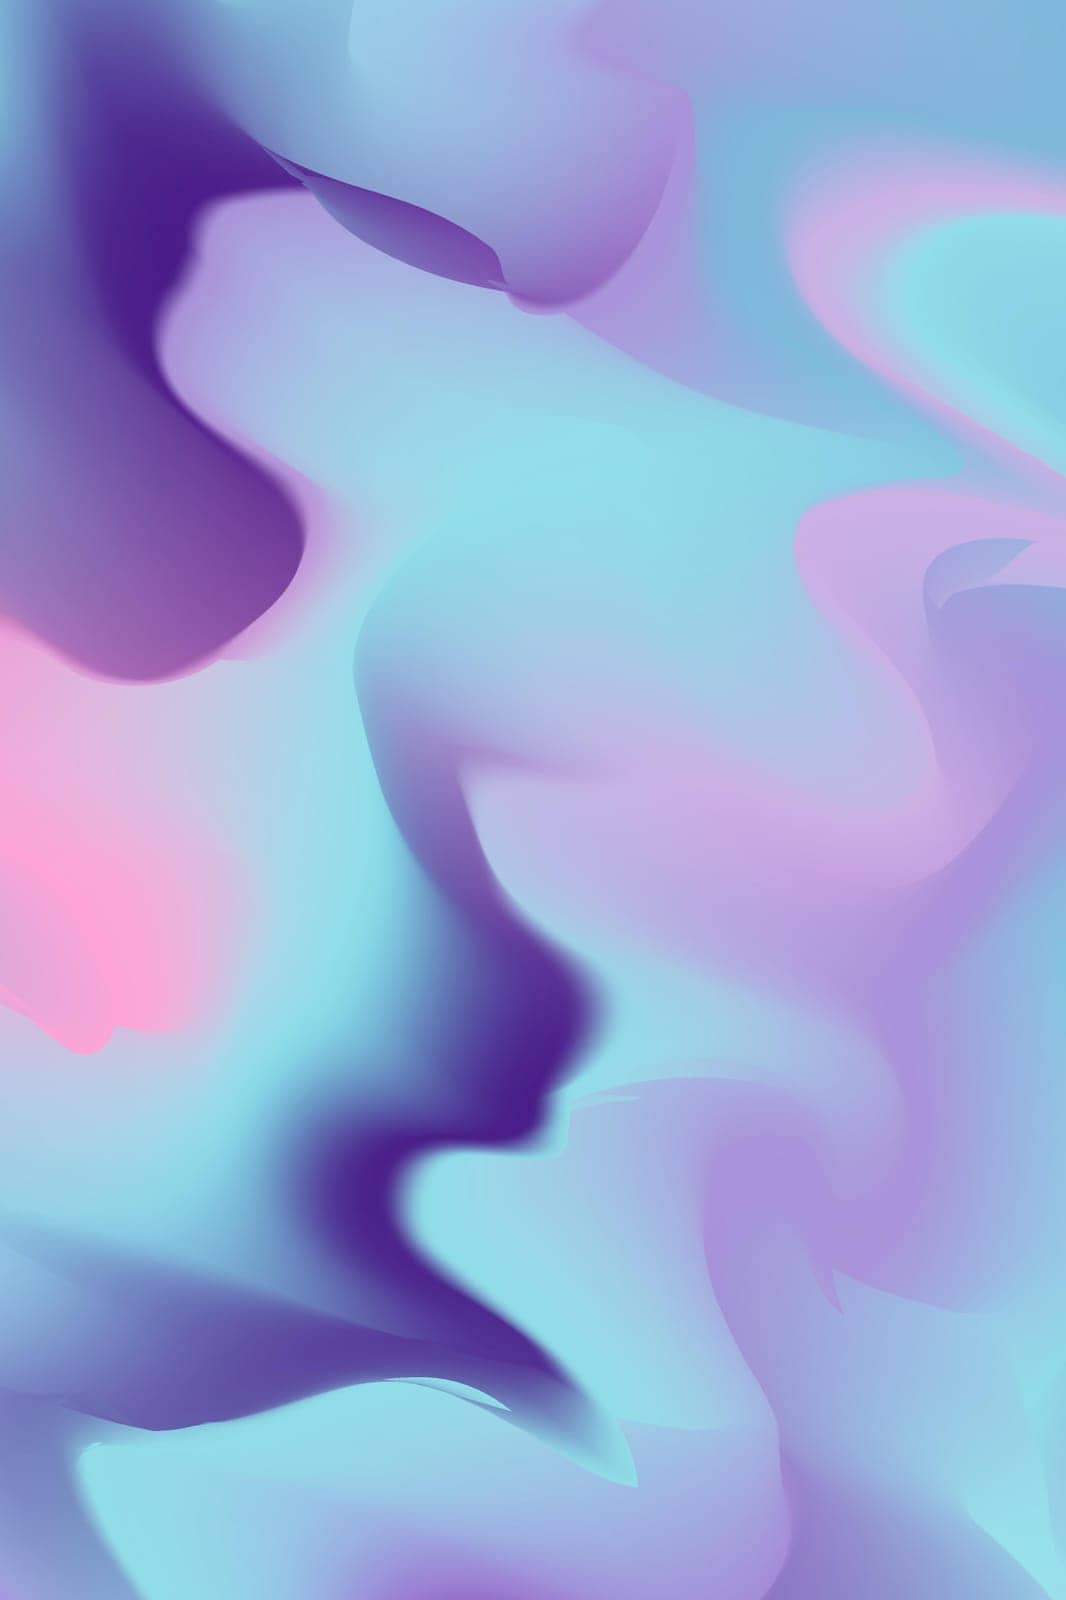 Vibrant Gradient Background. Blurred Color Wave. Vector EPS.